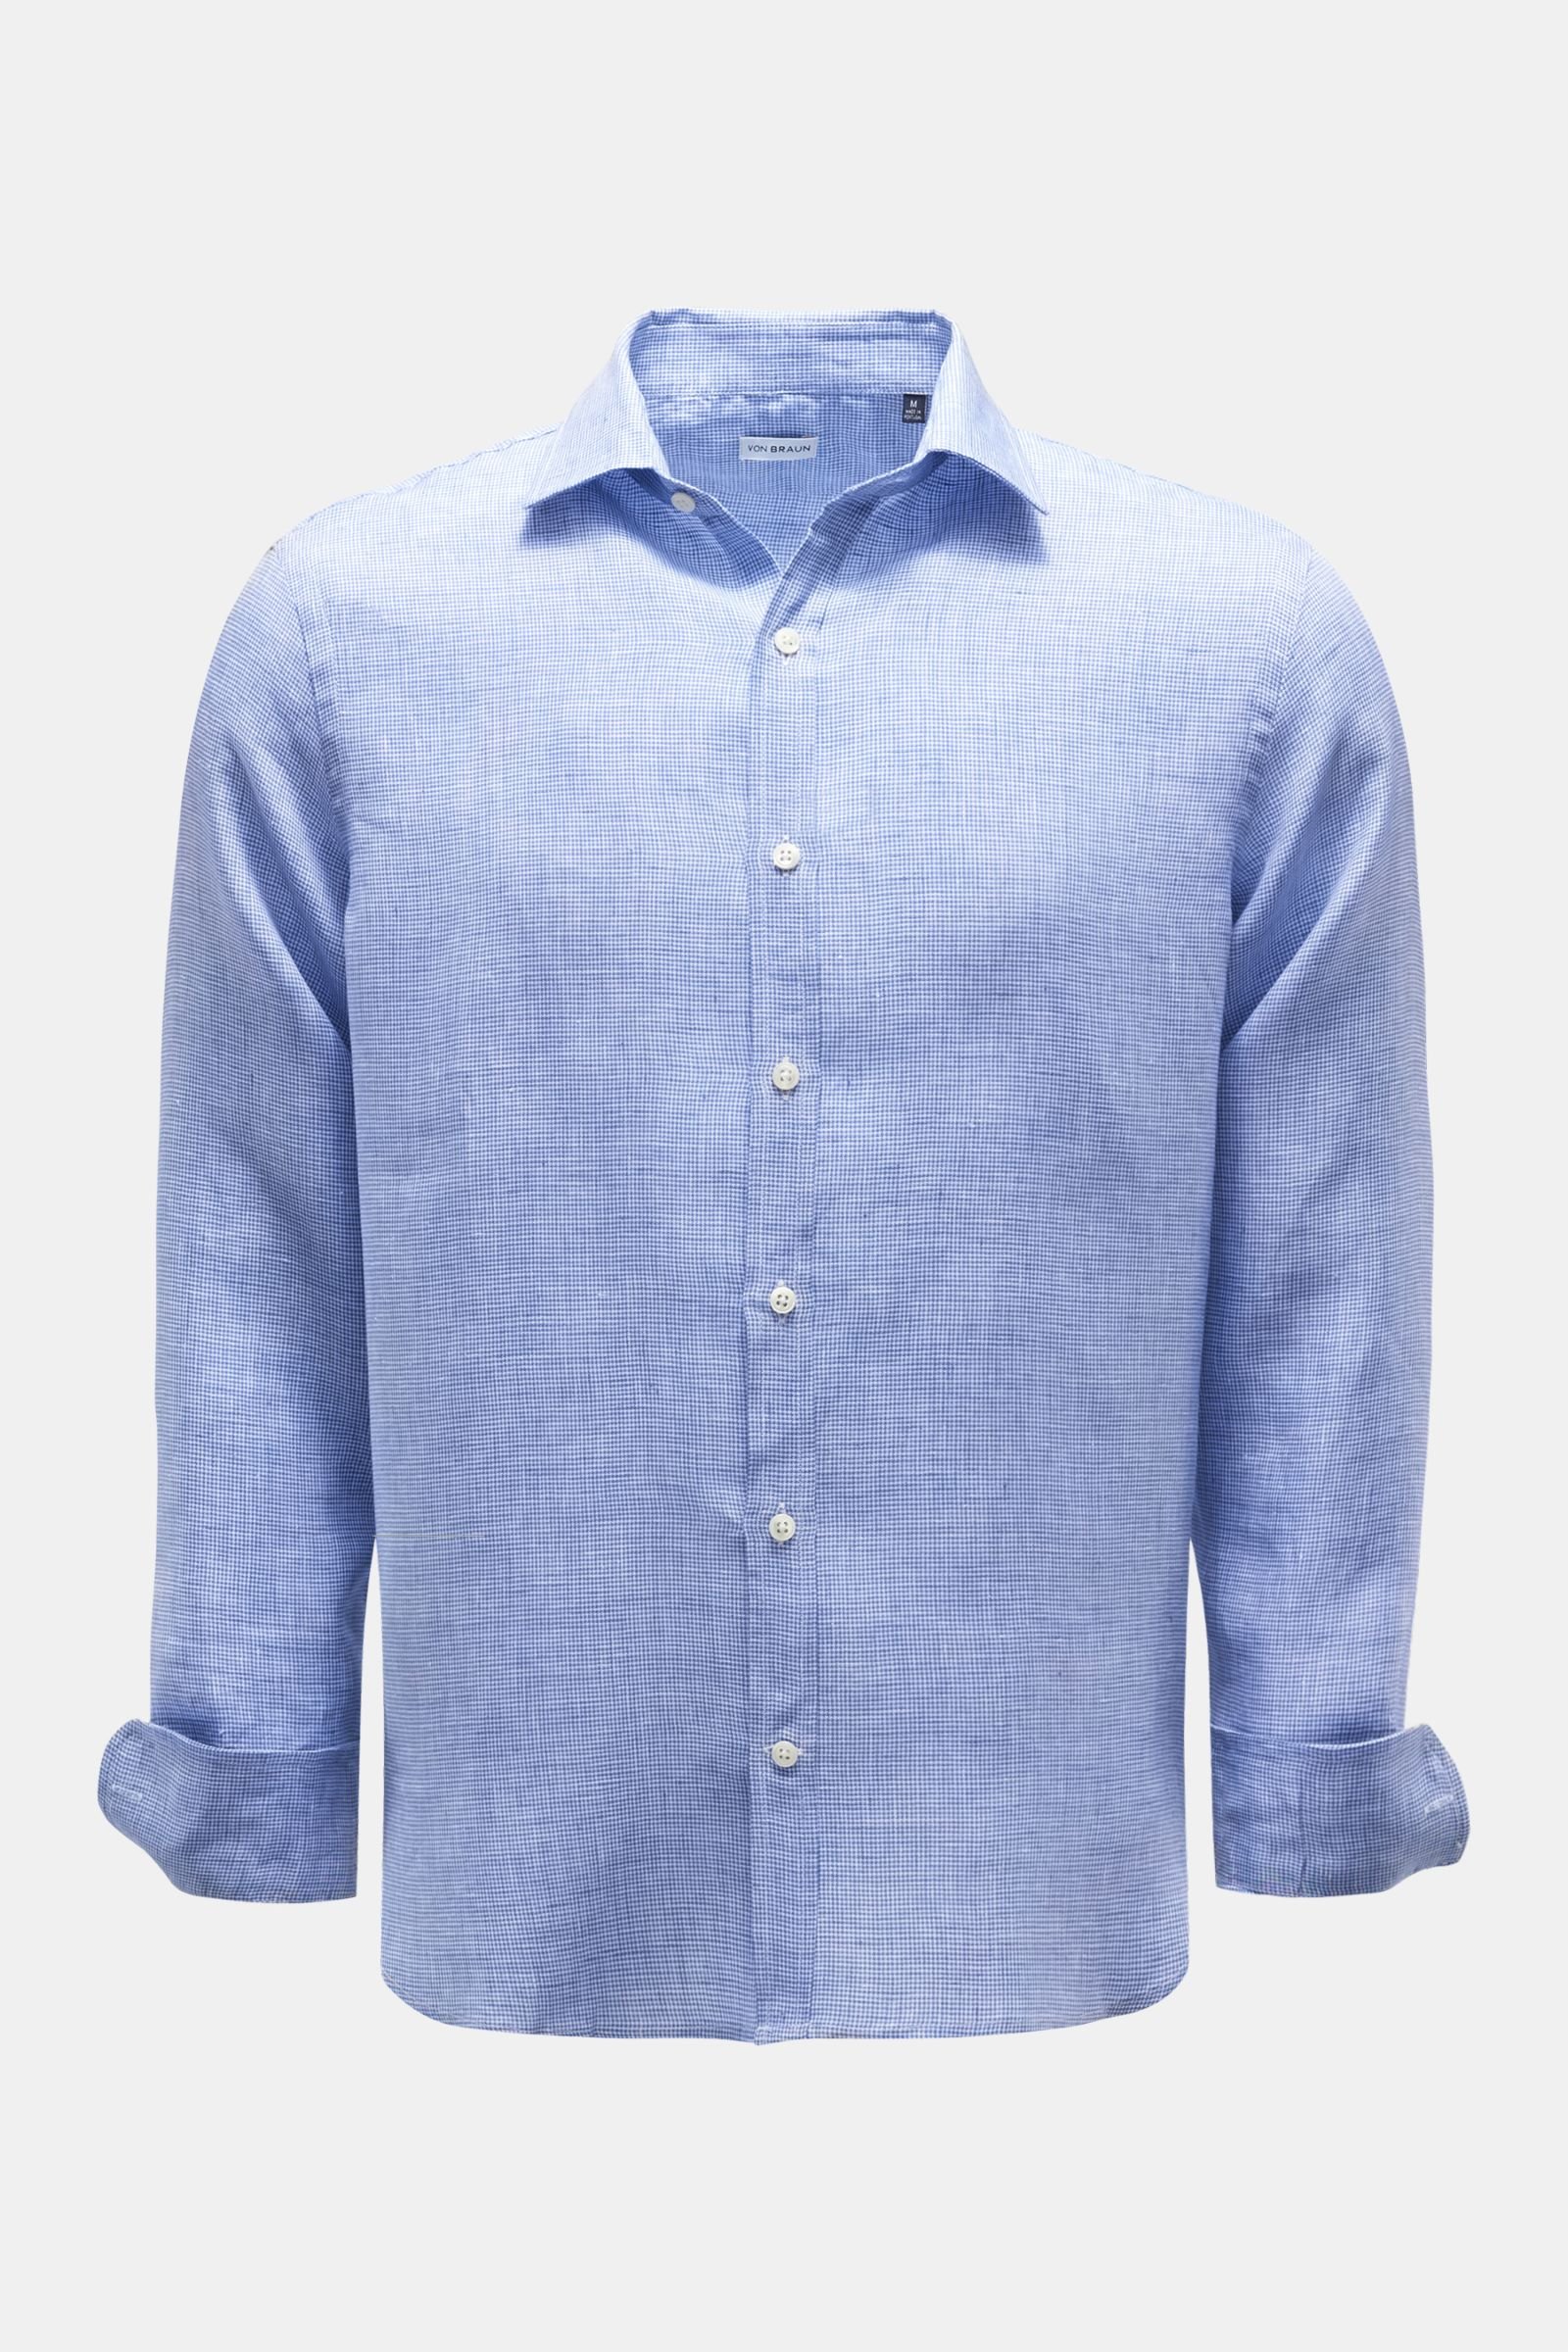 Linen shirt Kent collar blue/white checked 